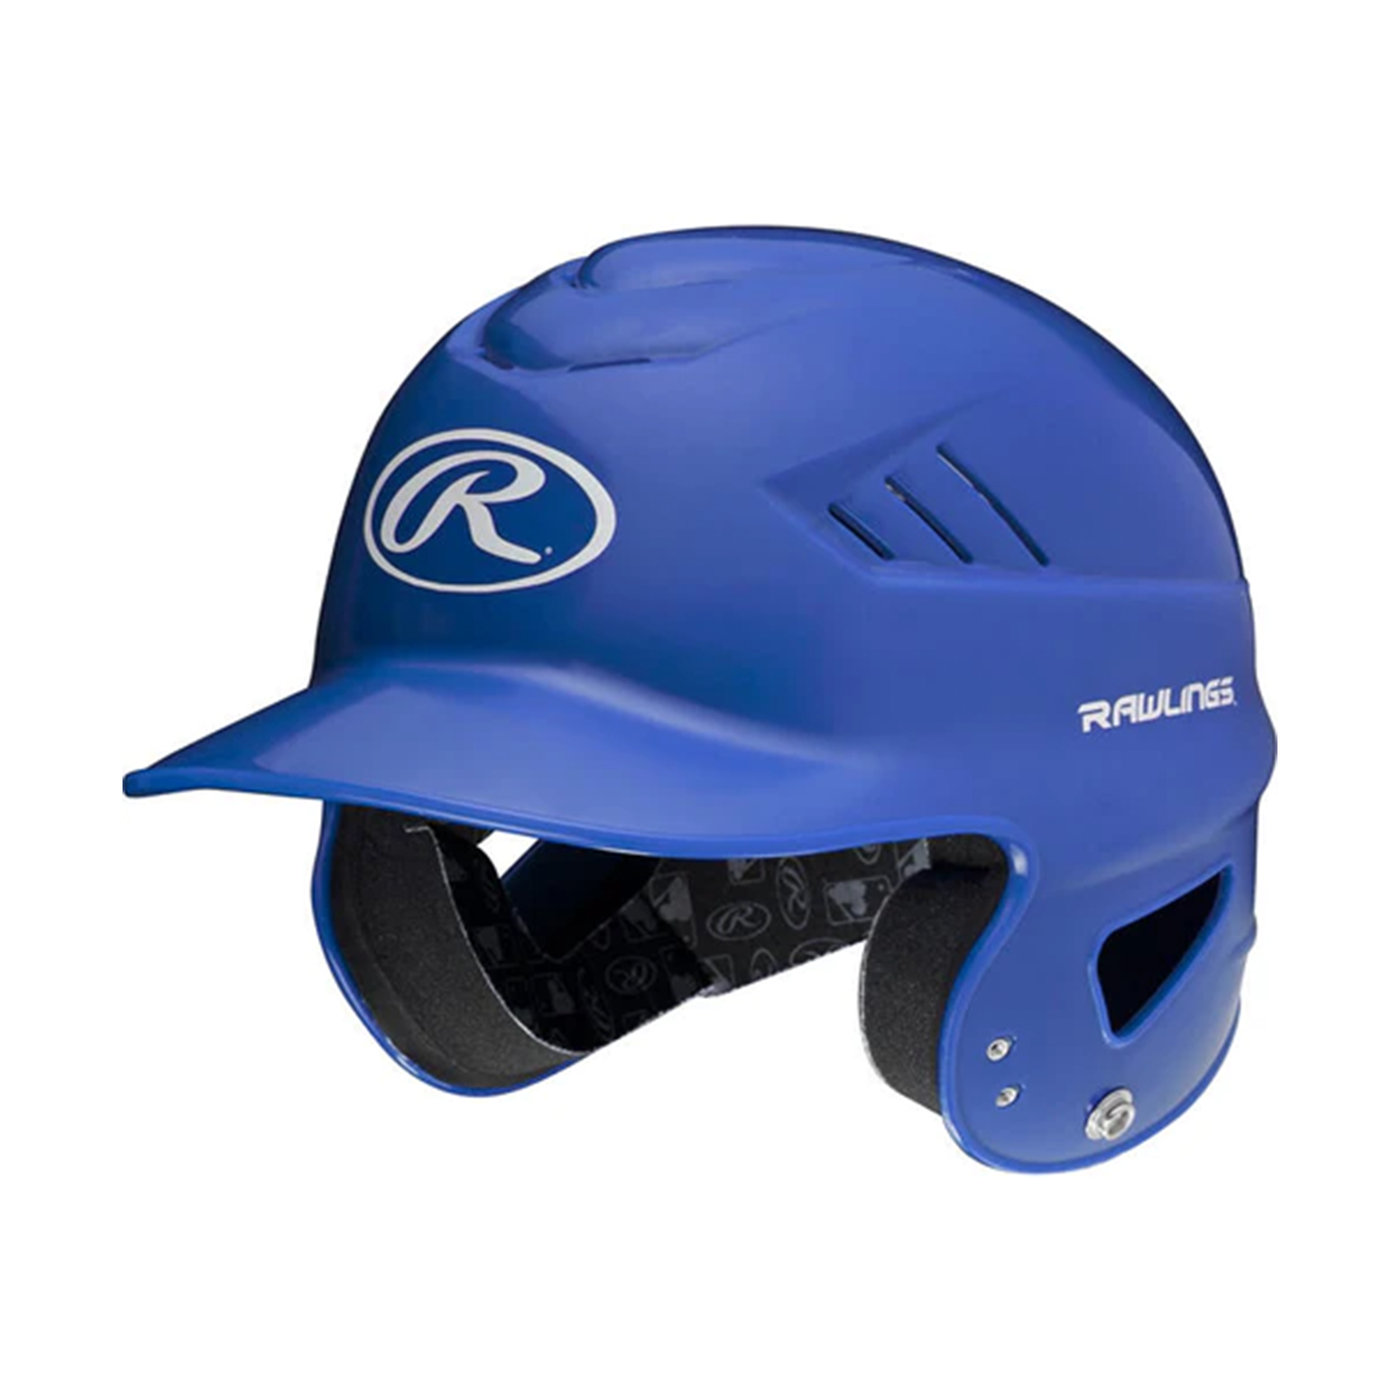 Rawlings Cool Flo Molded Helmet